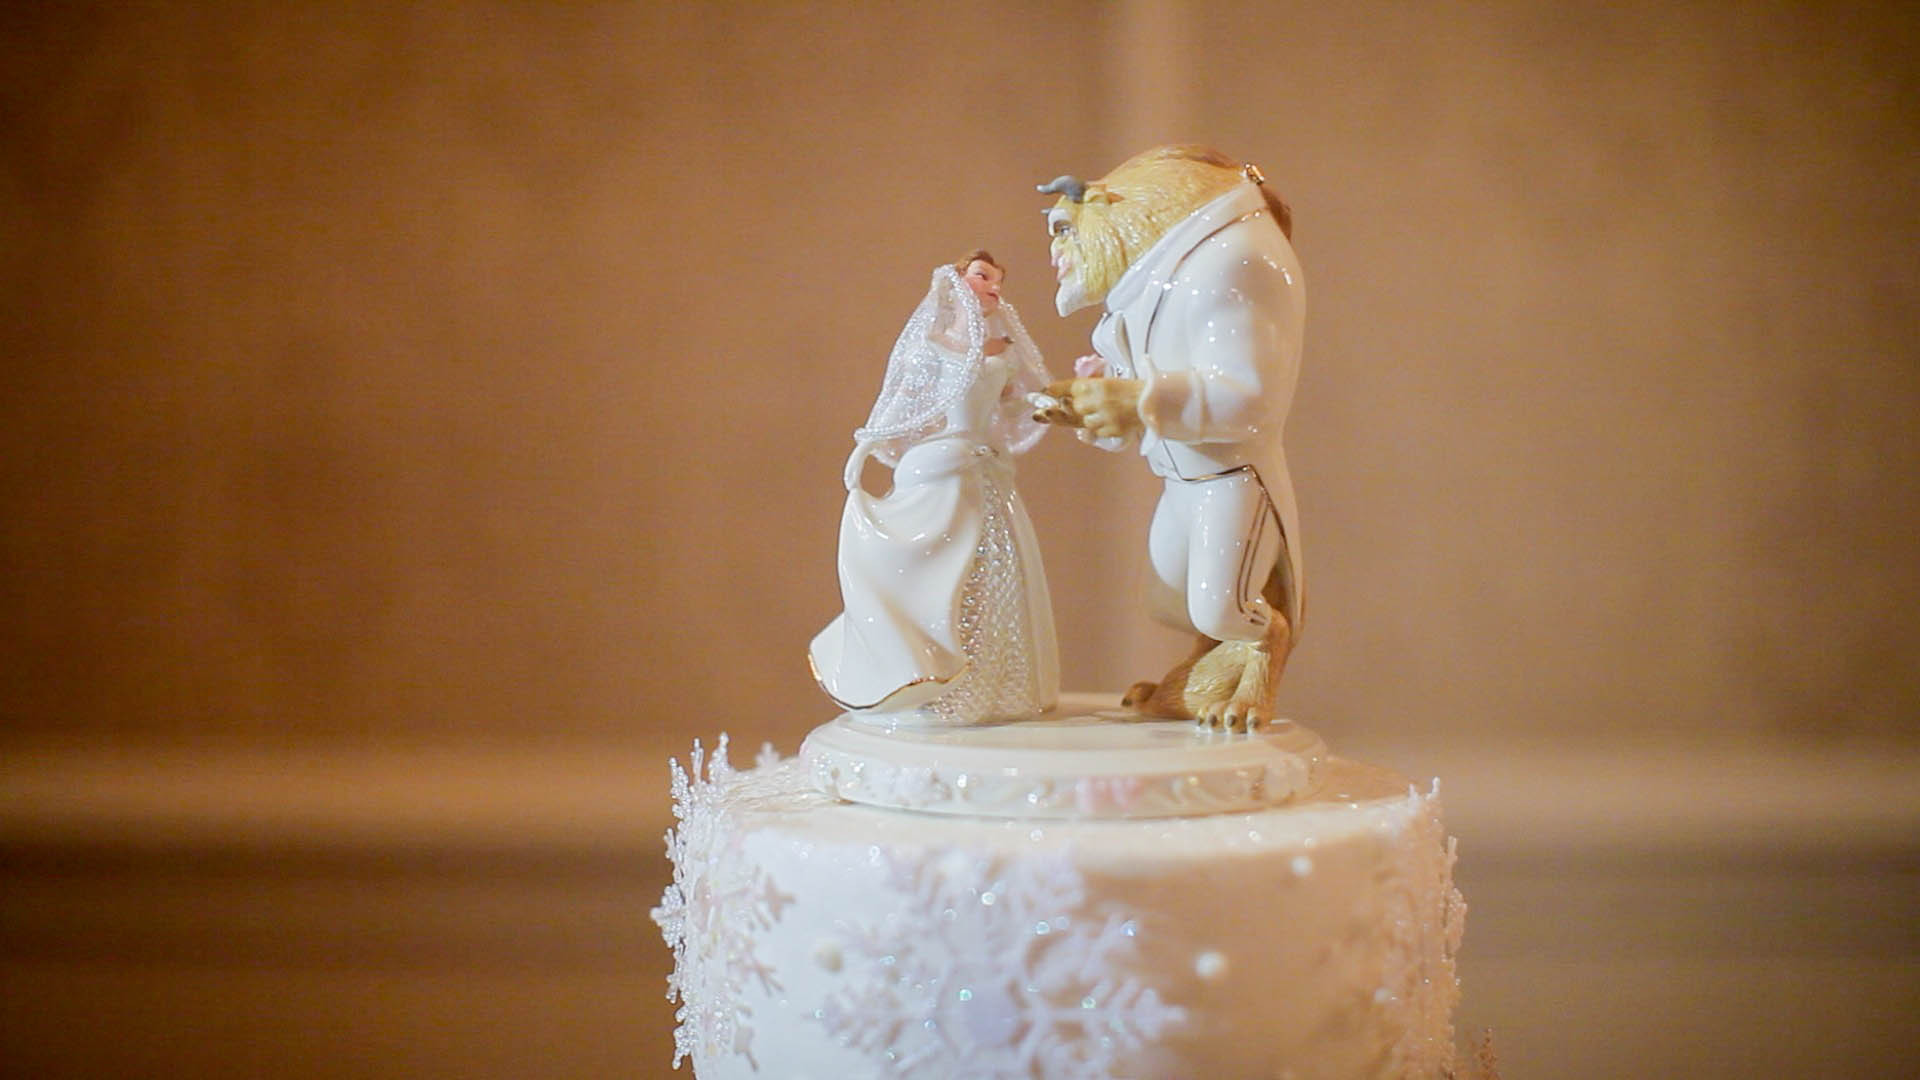 Beauty And The Beast Wedding Cake Topper
 Wedding Cake Idea